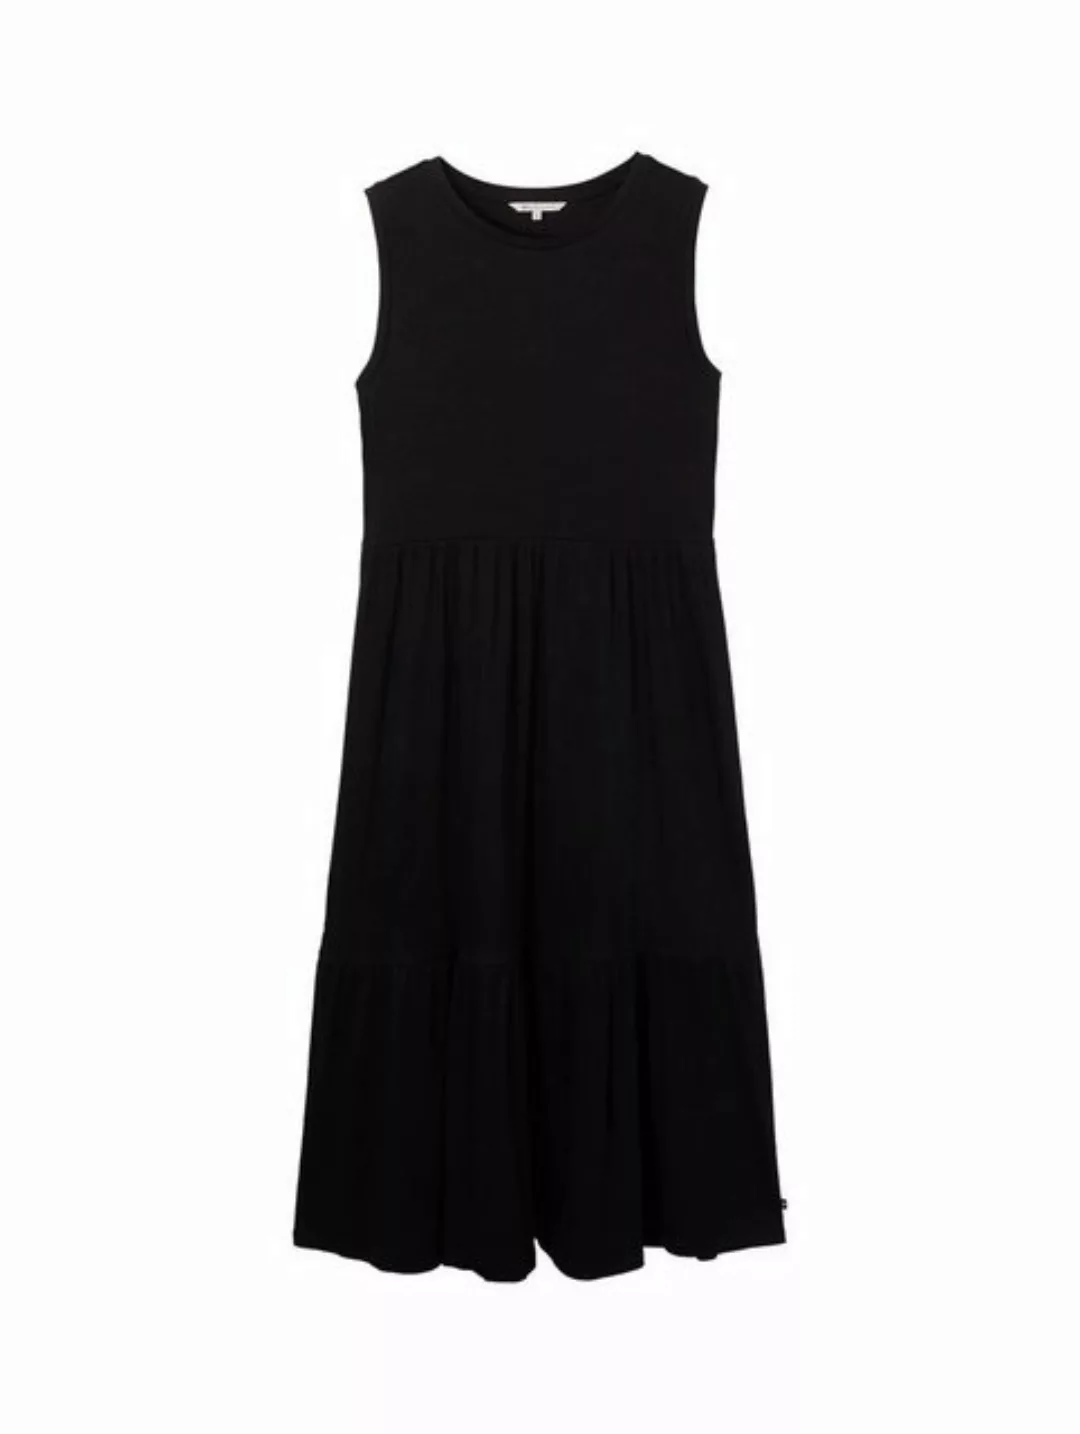 TOM TAILOR Denim Sommerkleid jersey rib midi dress, deep black günstig online kaufen